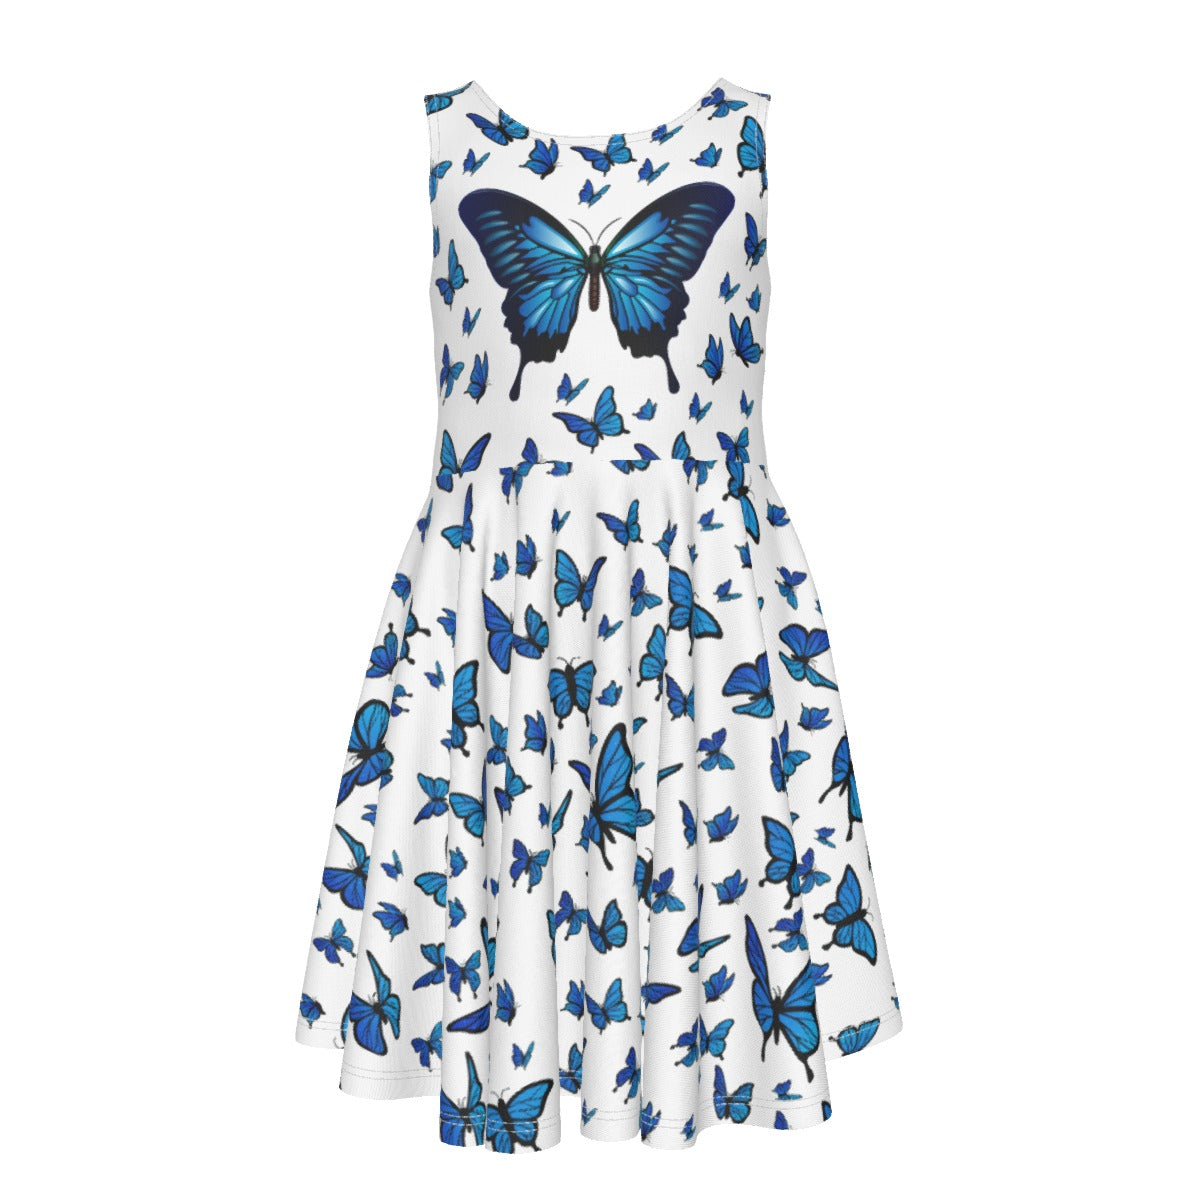 Special Butterfly Sleeveless Vest Kid's Dress - T0242